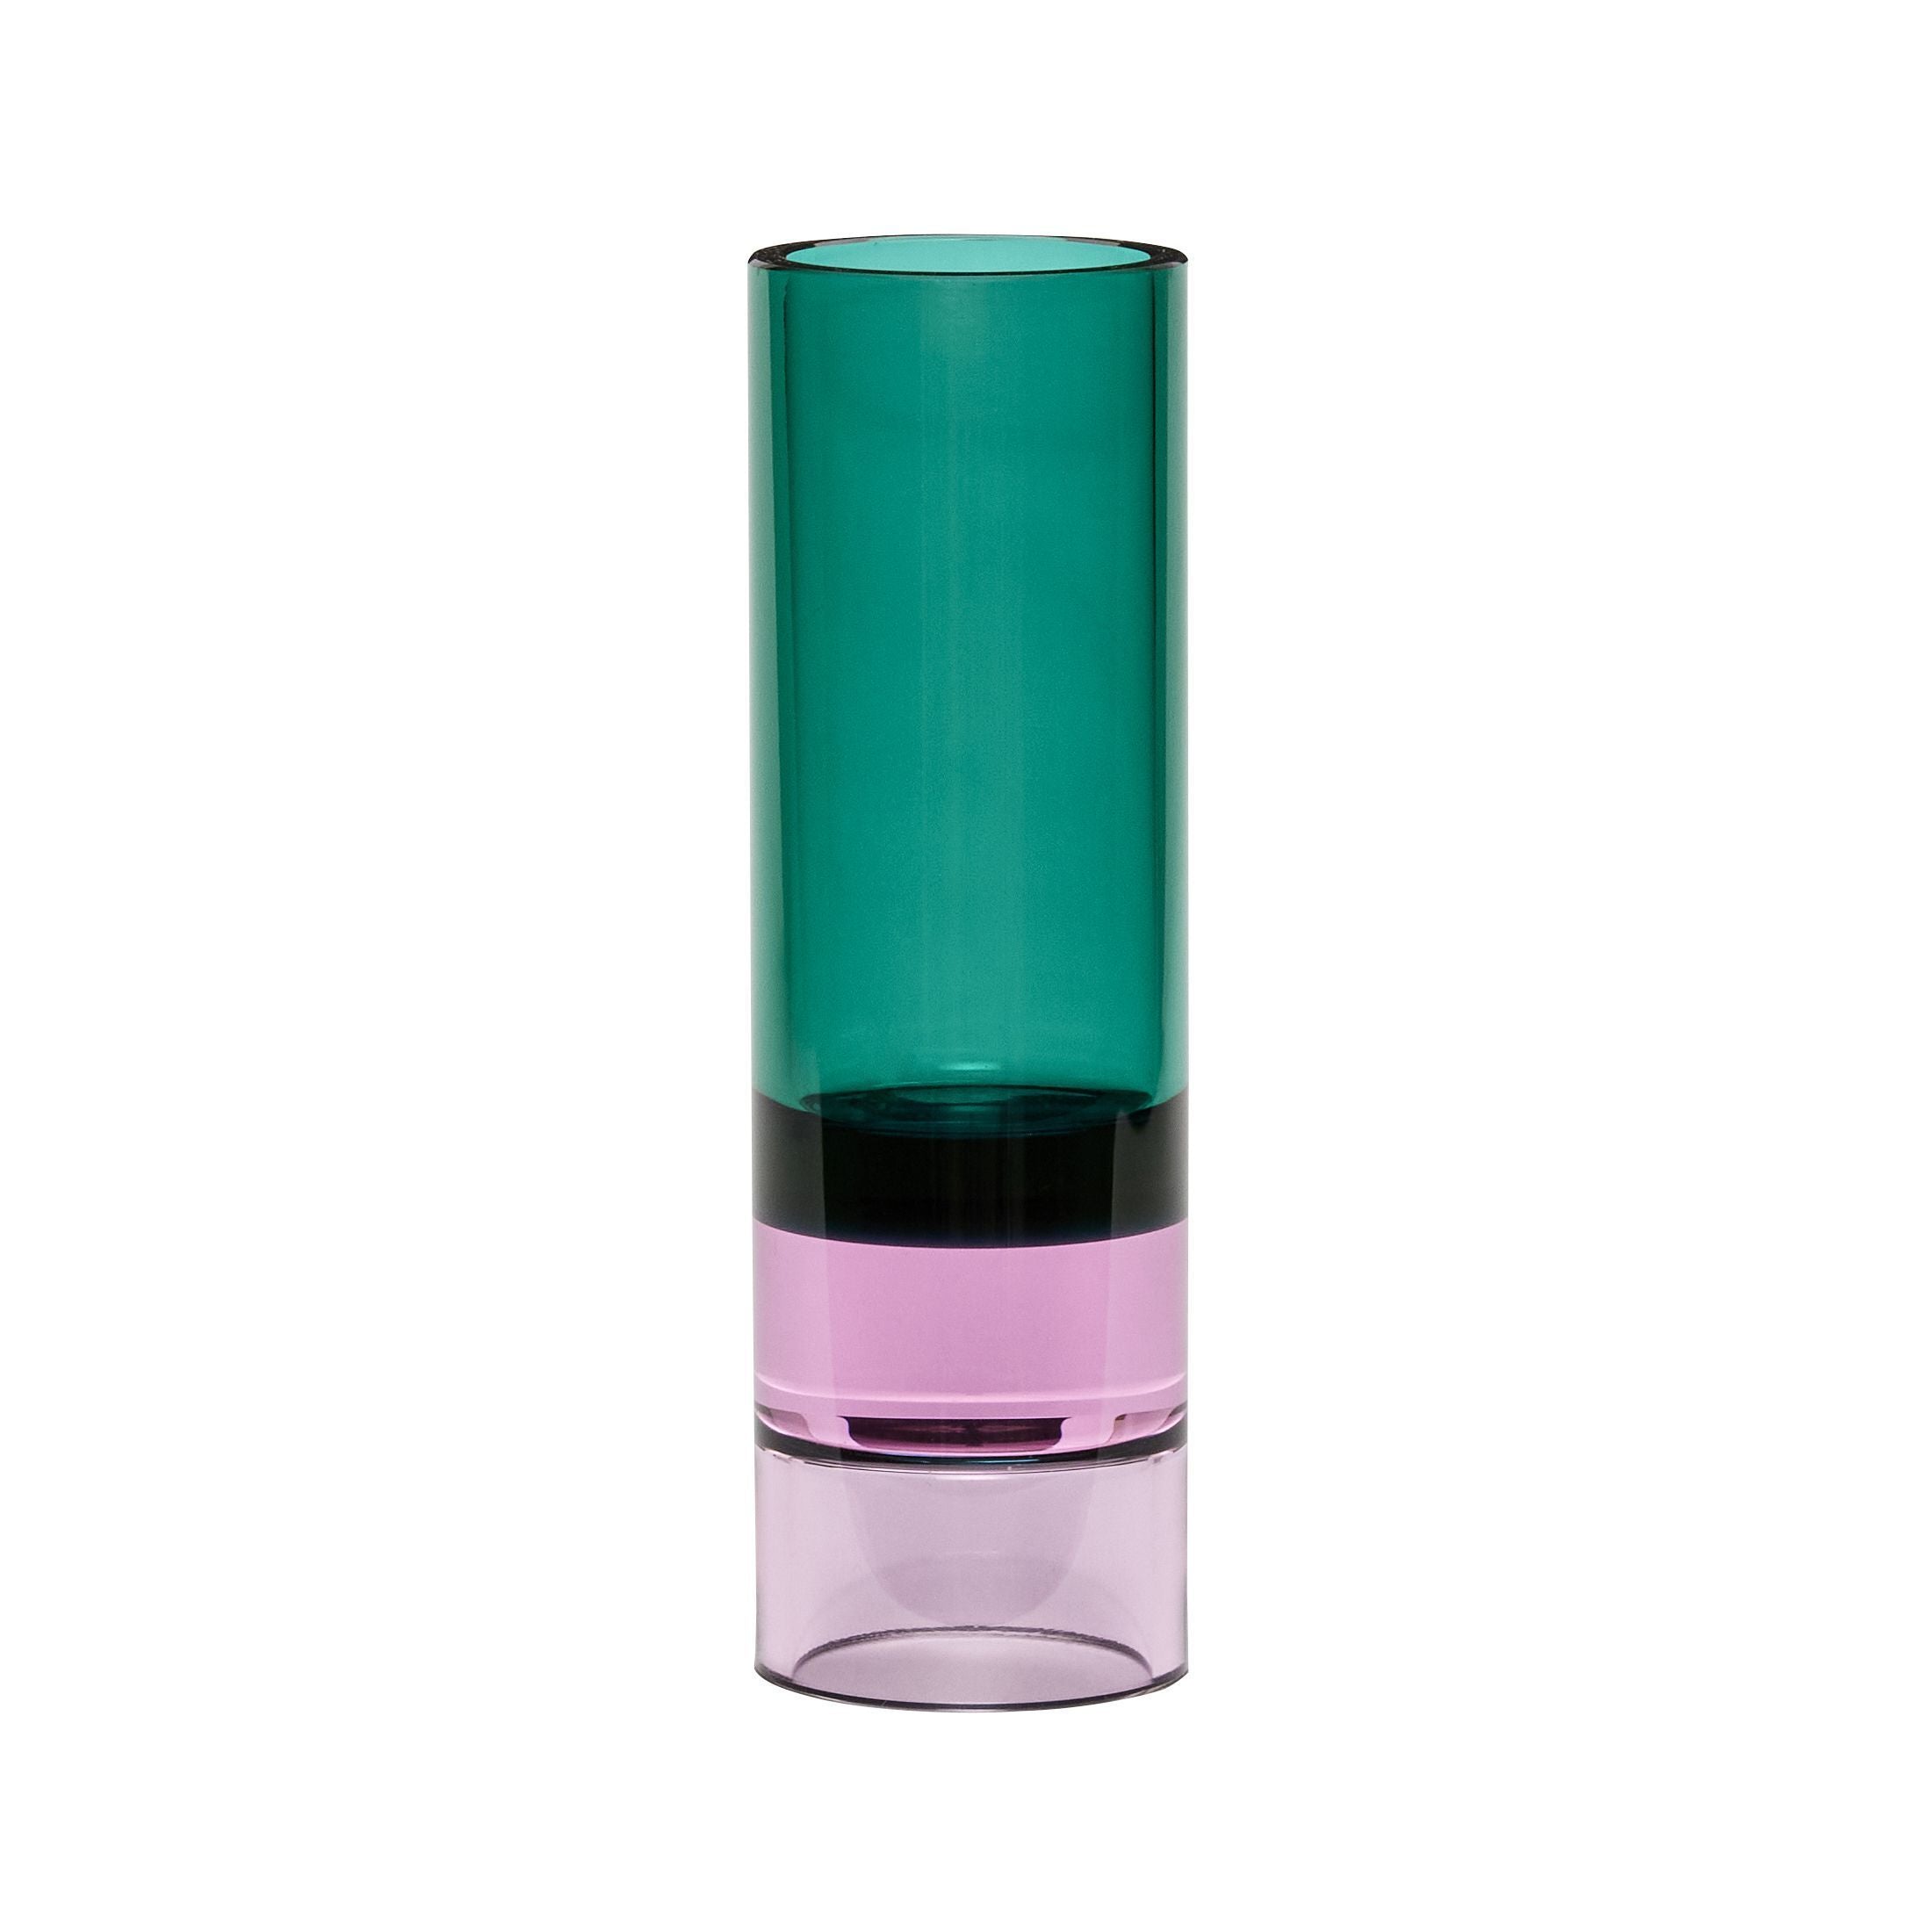 Hübsch Astro Tealight -houder Crystal, groen/roze